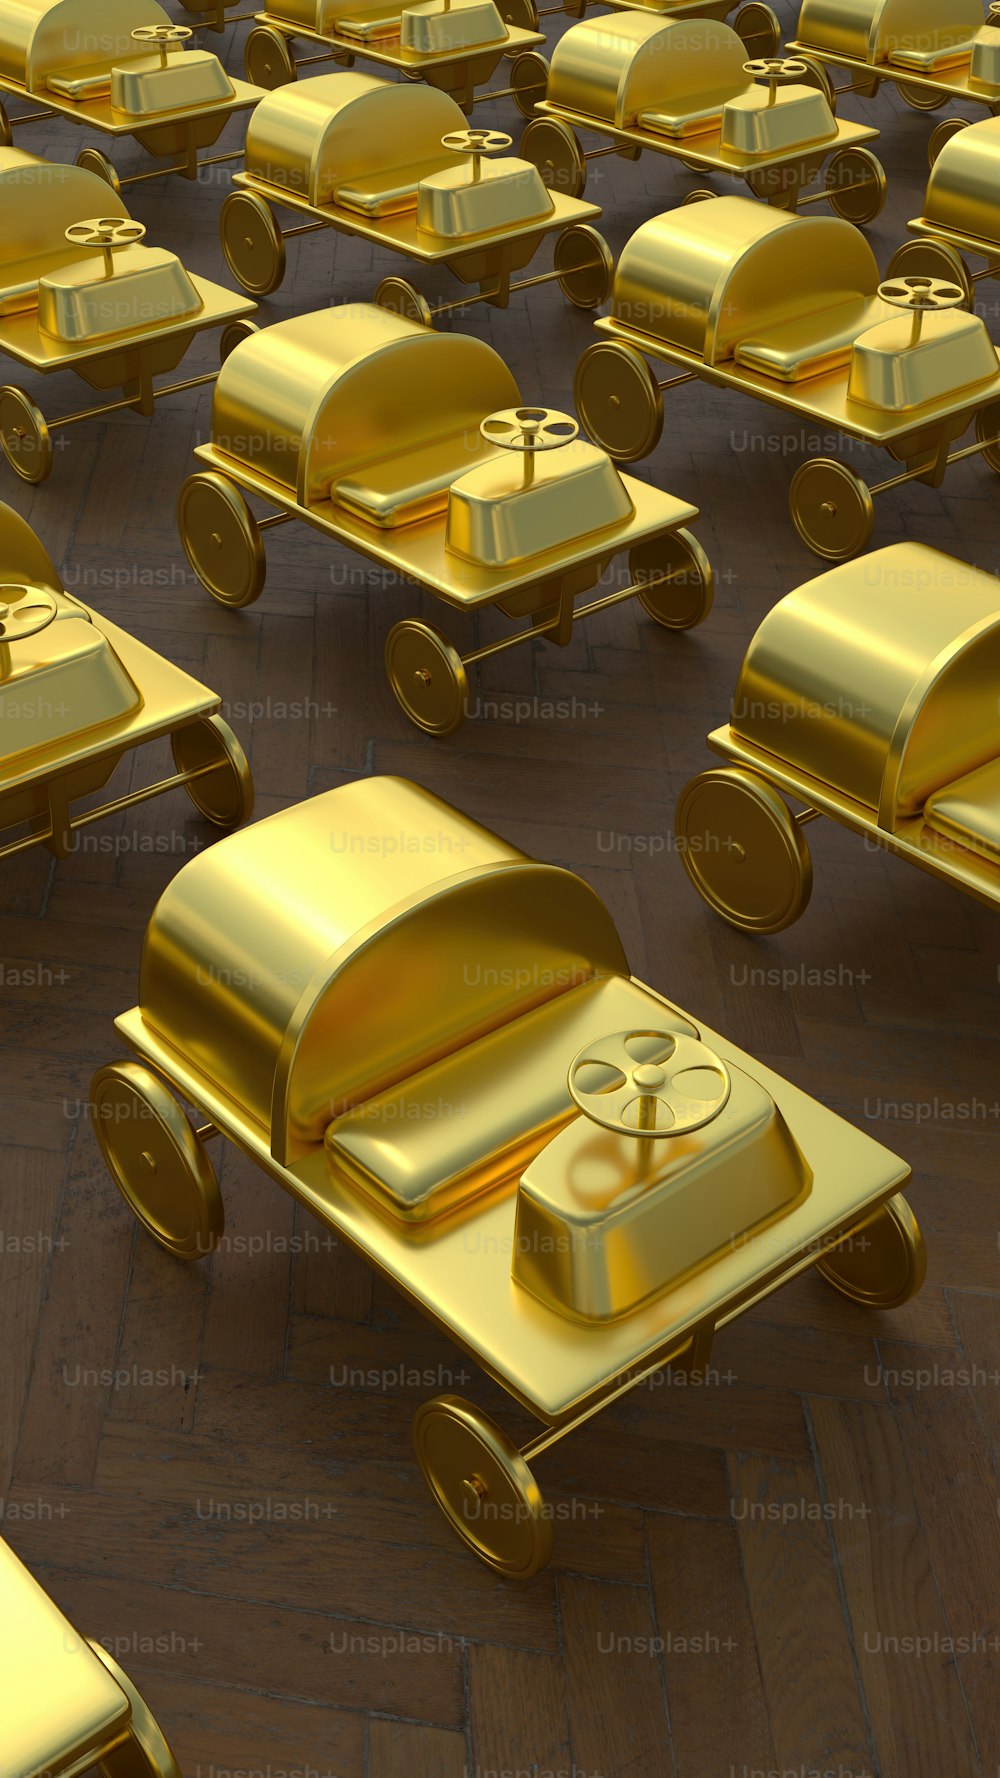 Un gran grupo de autos de juguete dorados sentados encima de un piso de madera